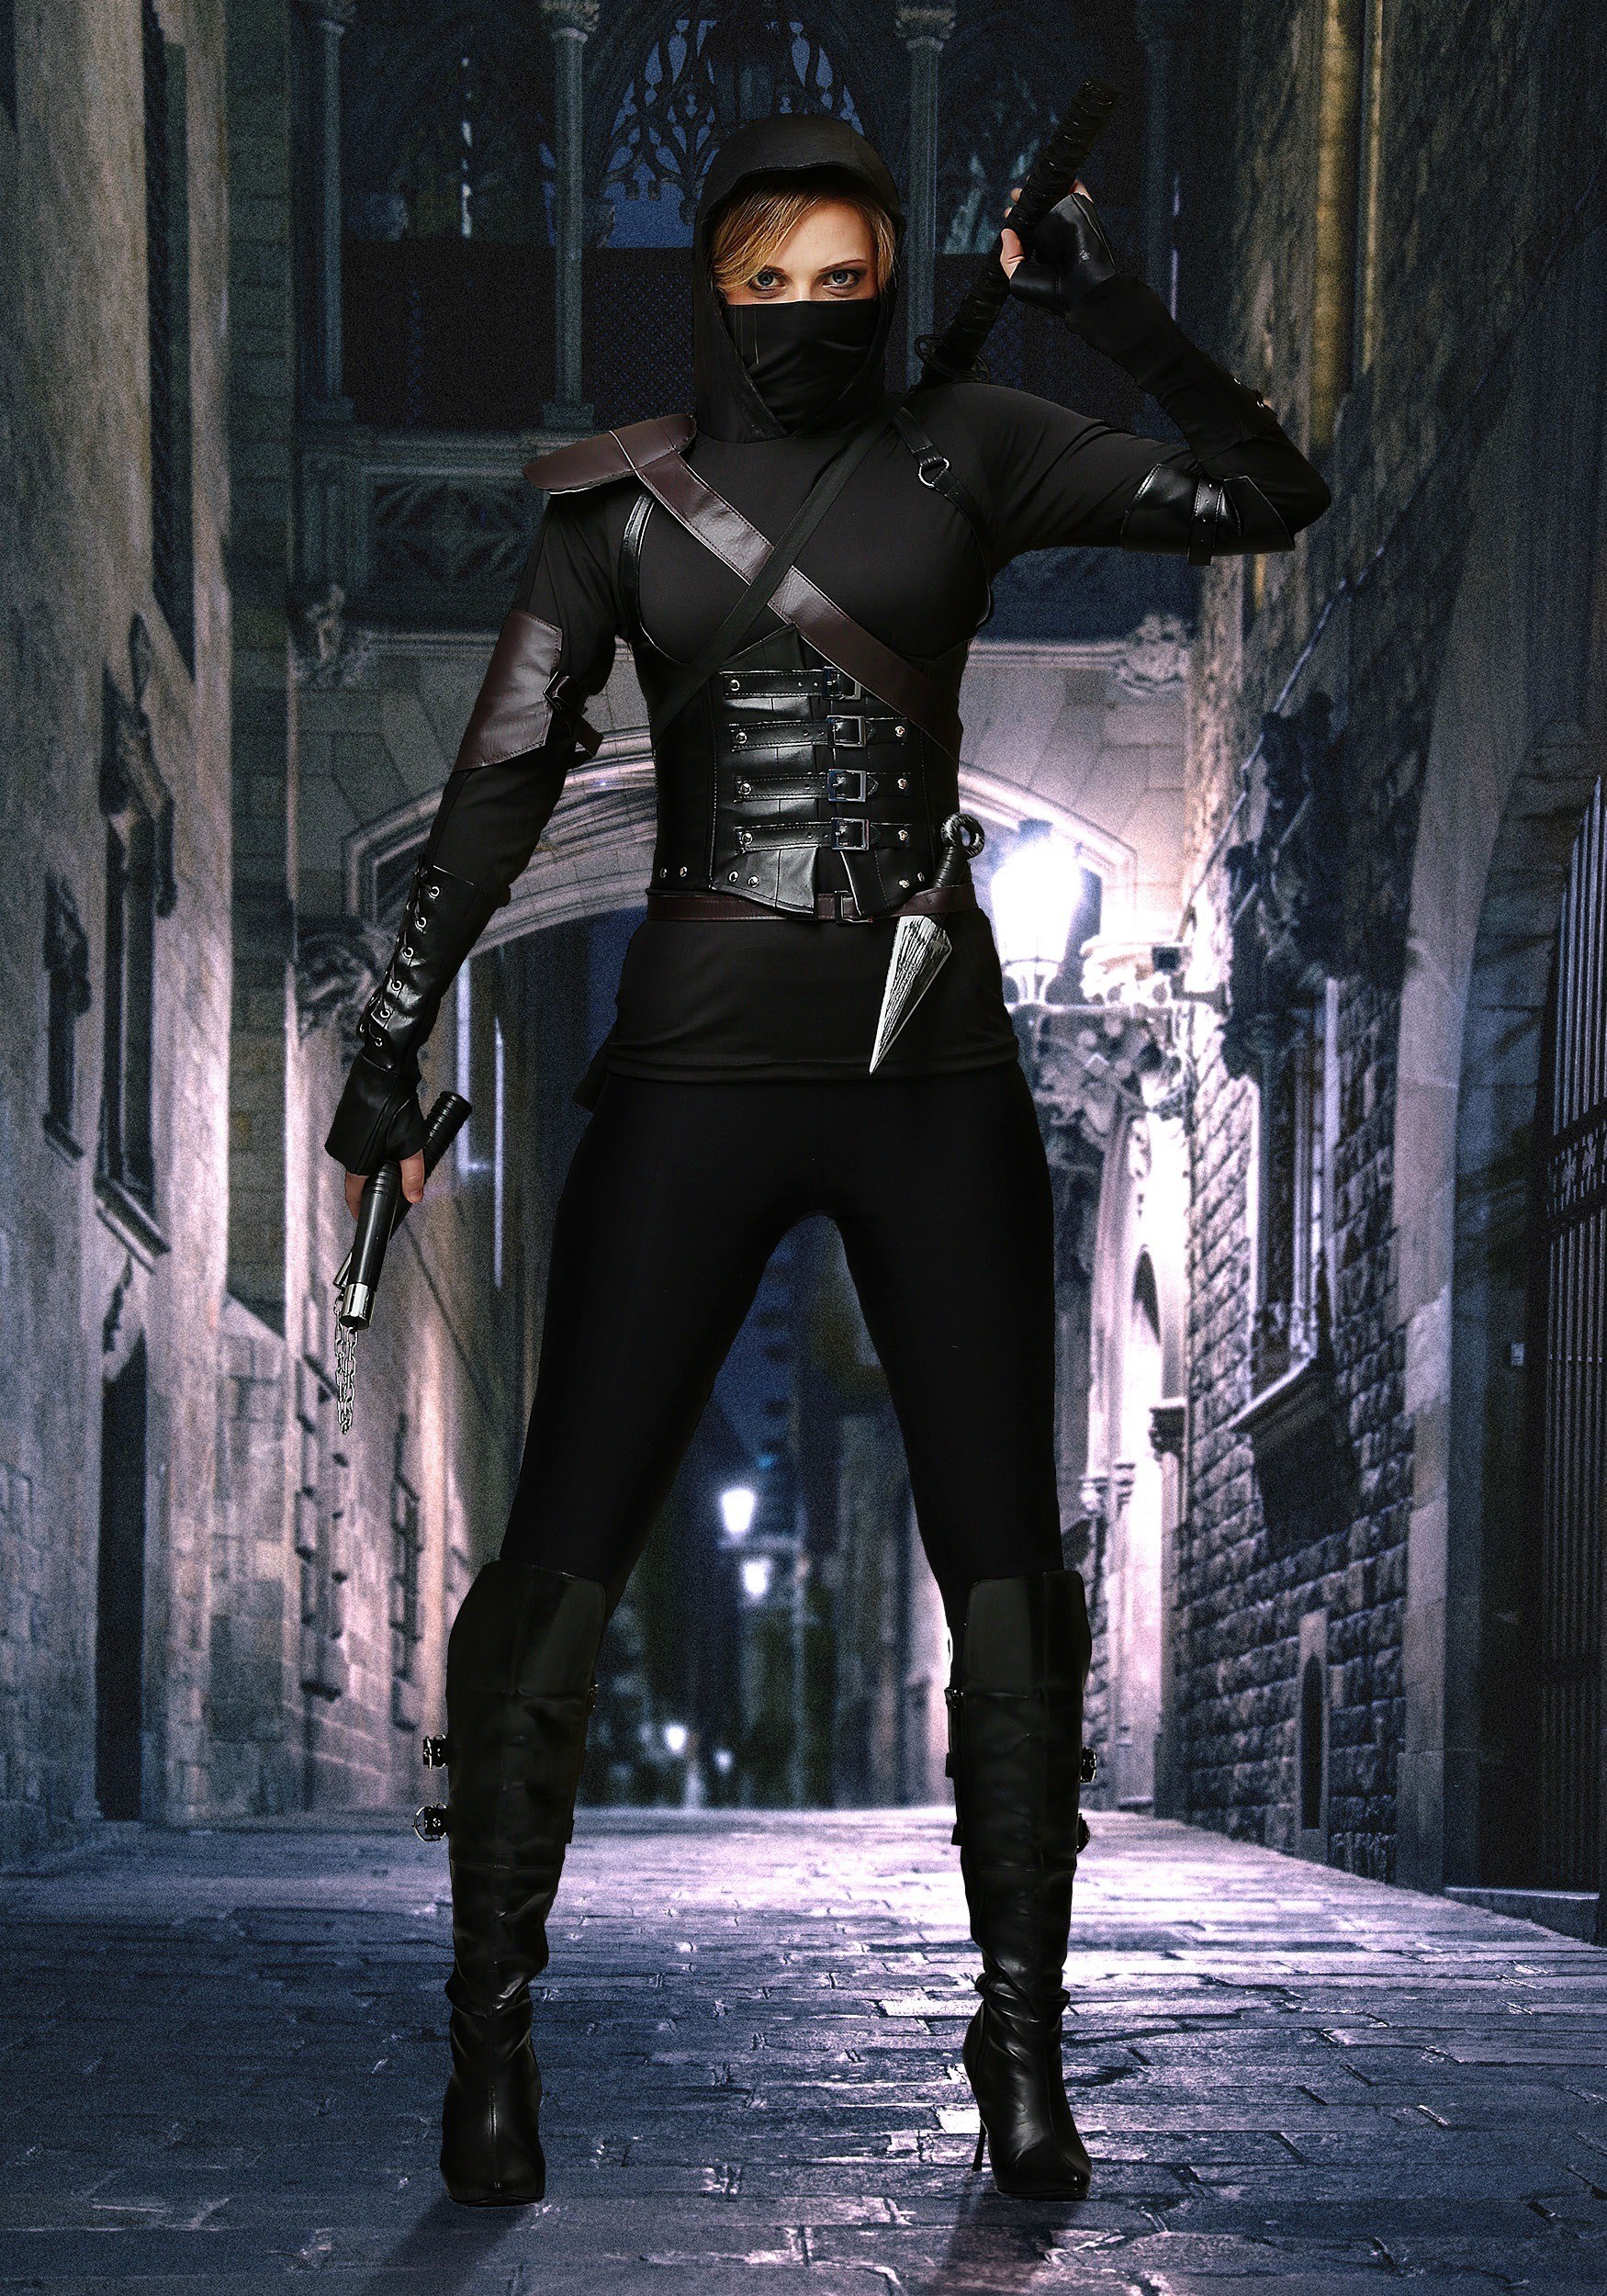 ninja assassin wallpaper,personaje de ficción,hombre murciélago,supervillano,catwoman,juegos